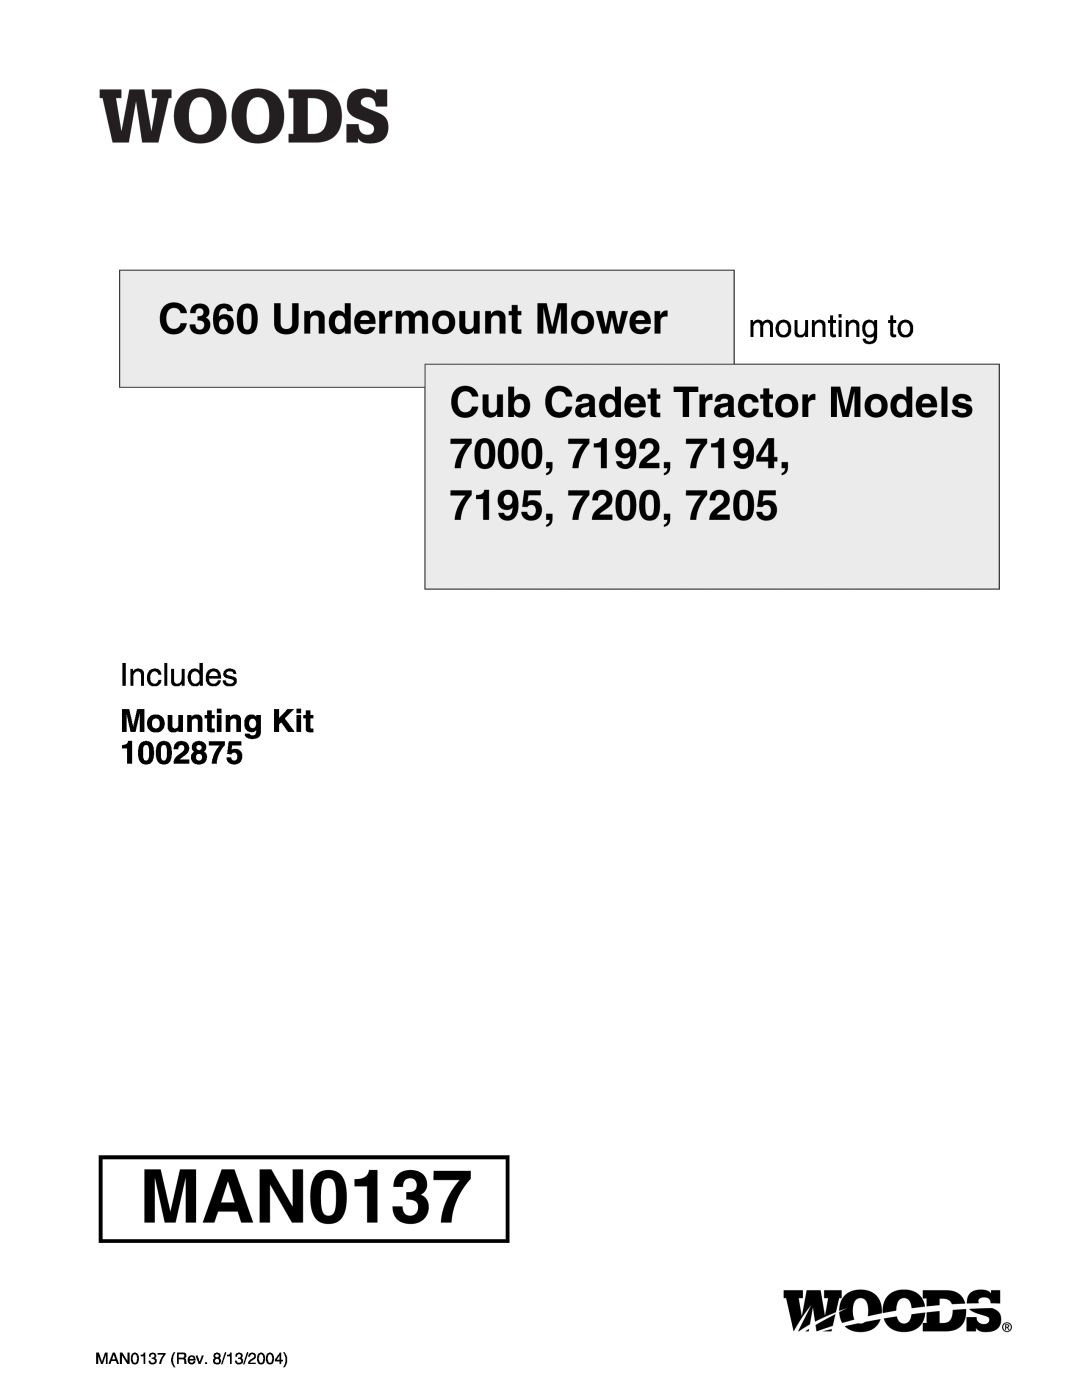 Woods Equipment 7000, 7192, 7194, 7195, 7200, 7205 manual C360 Undermount Mower mounting to, Mounting Kit, MAN0137 